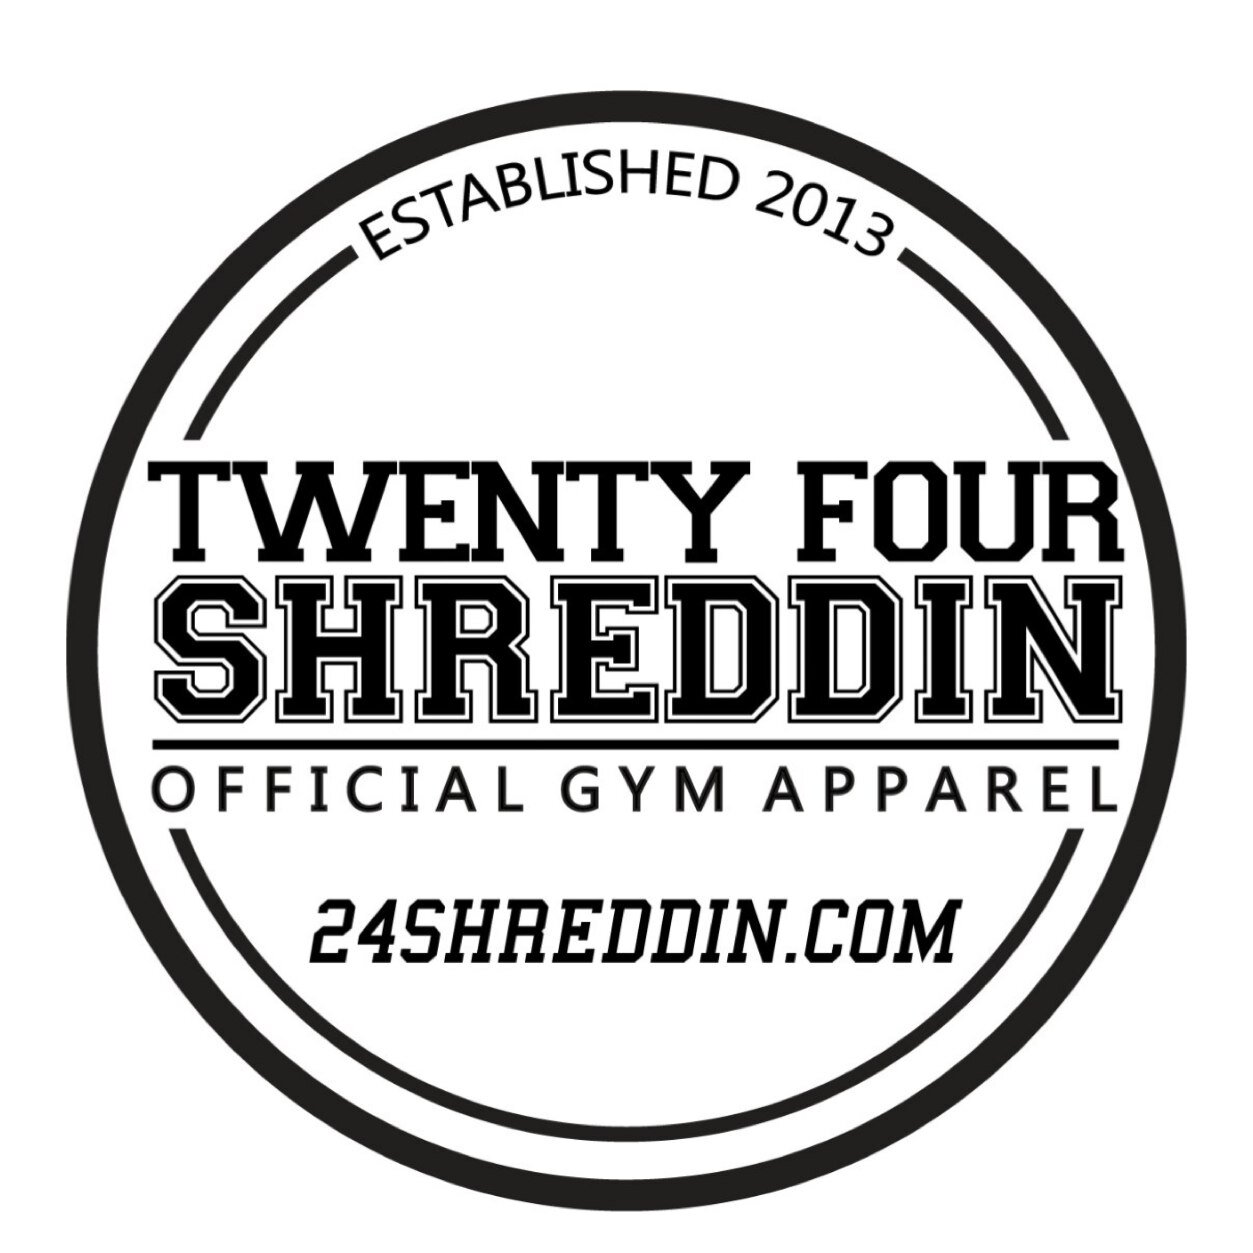 For those who know that Shreddin isn't seasonal, its a lifestyle. 24/Shreddin